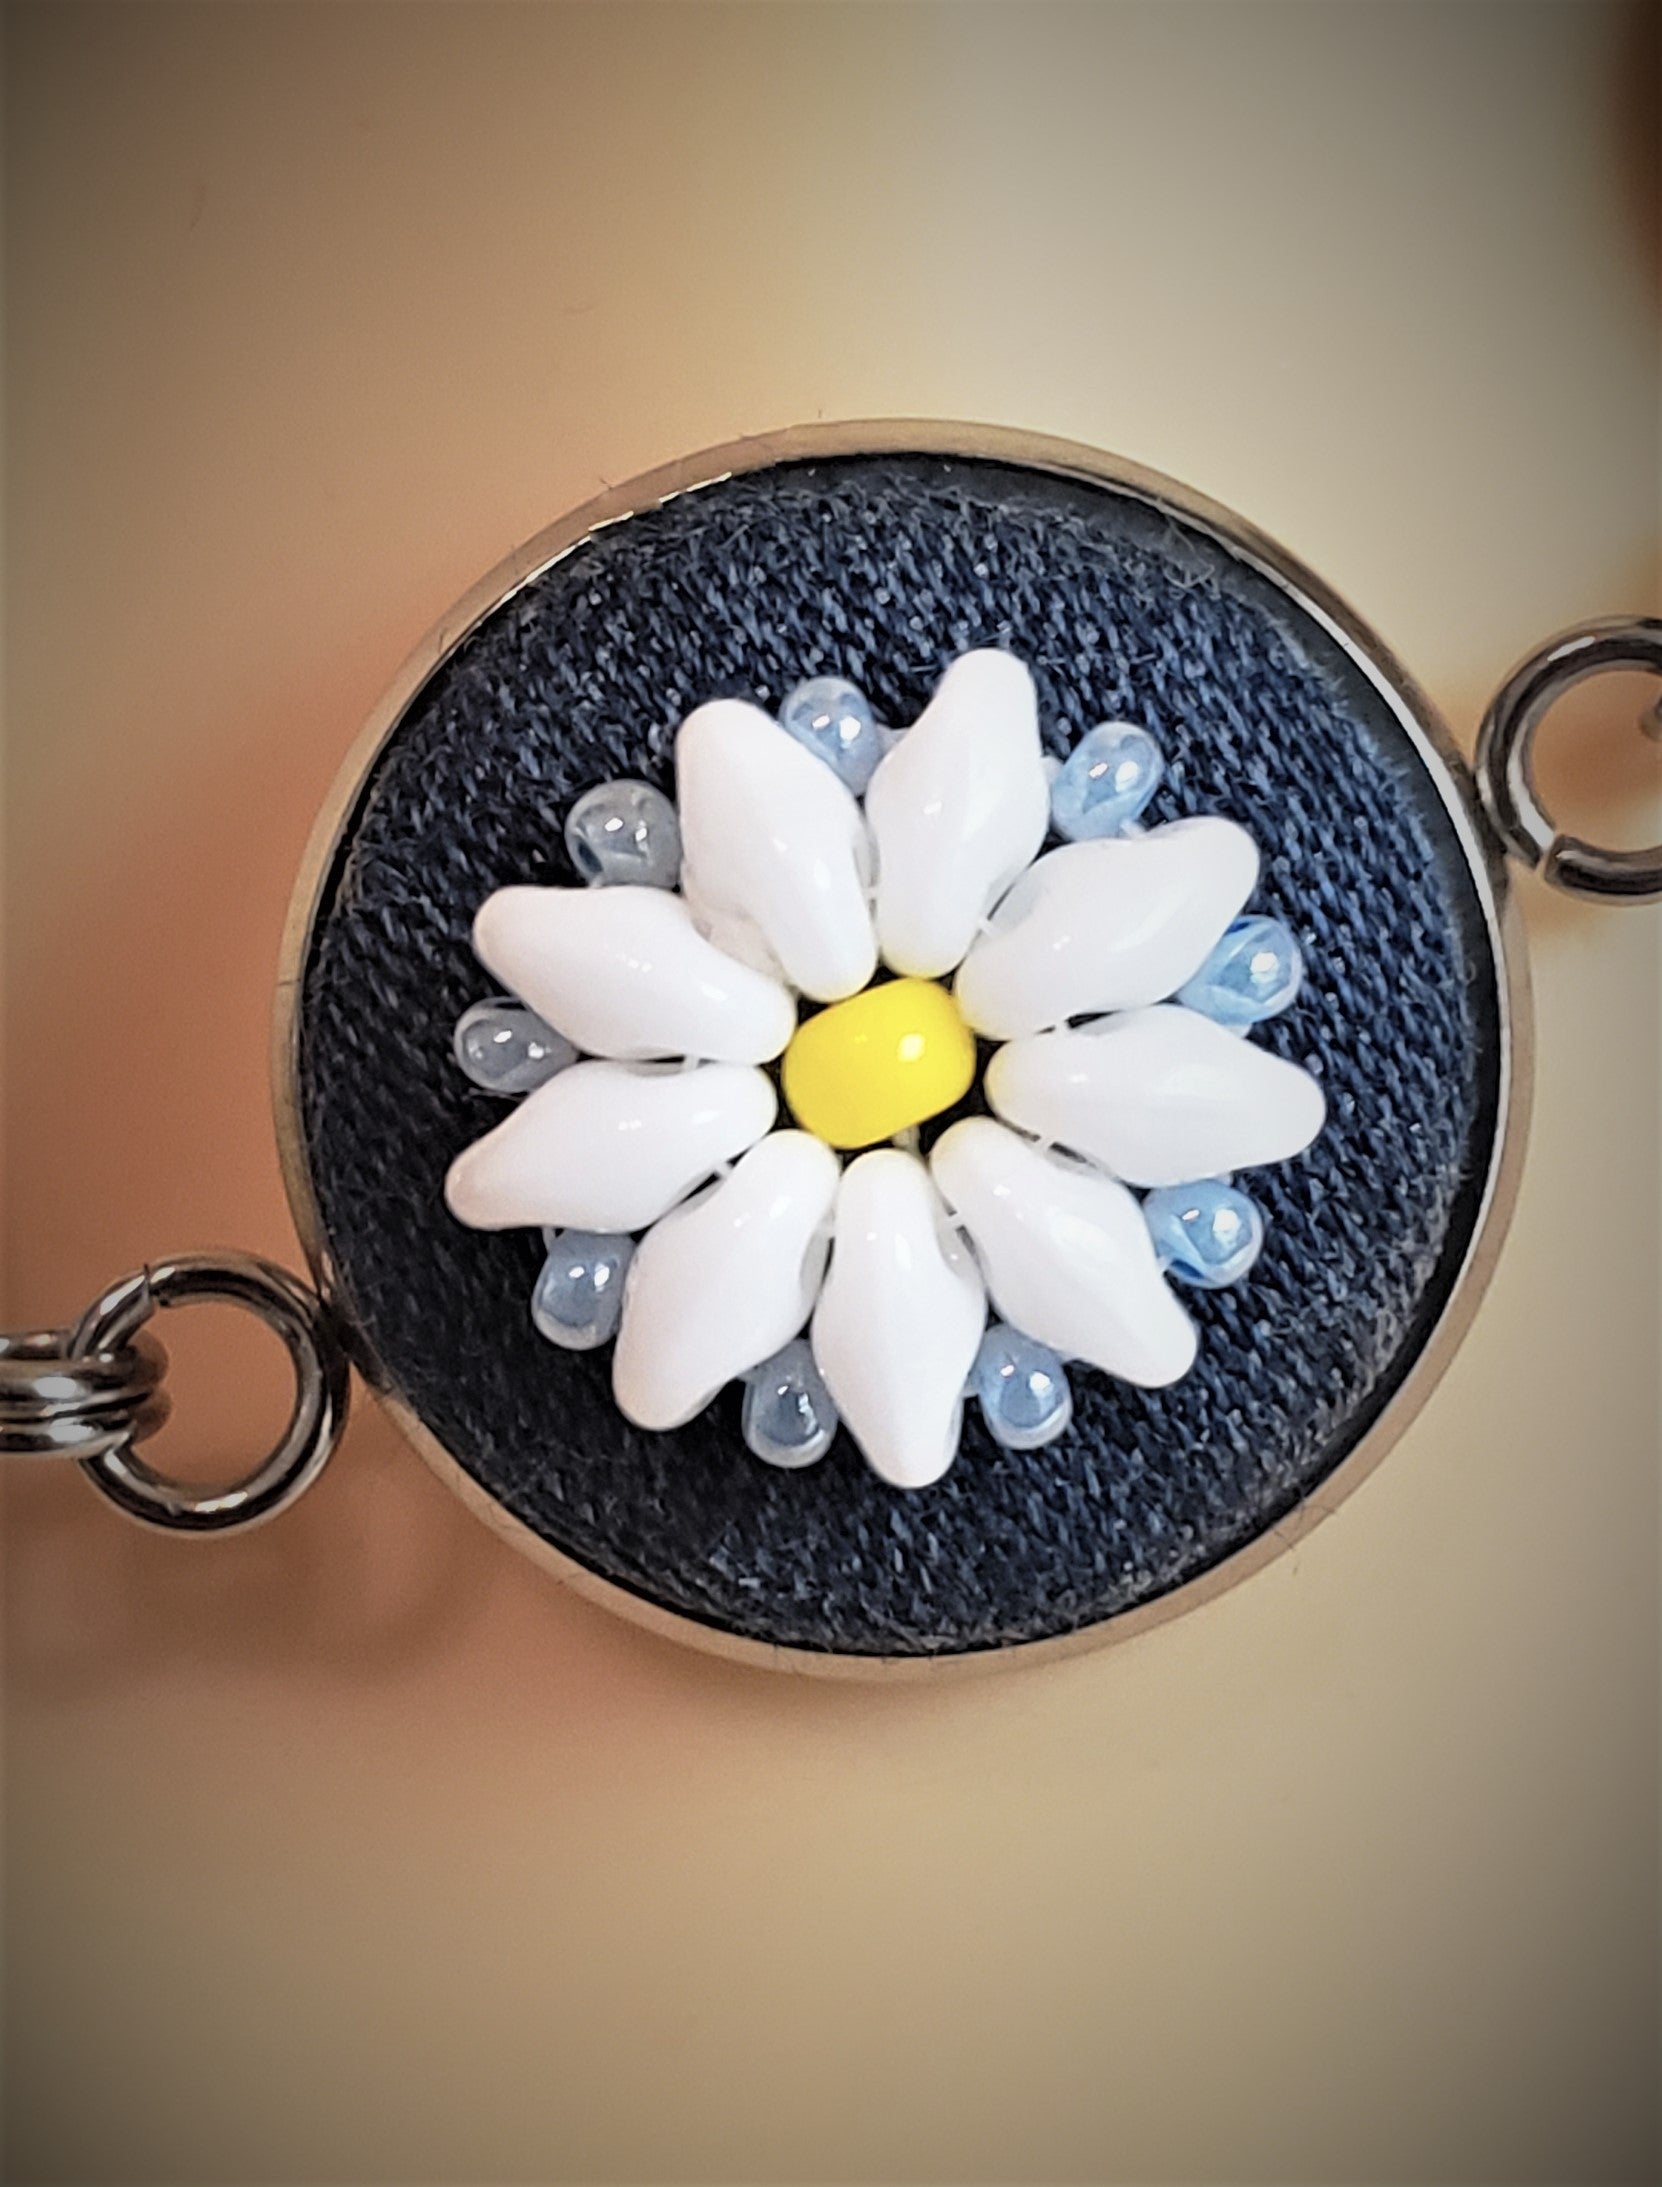 Short necklace and earrings set -  Denim flower - SN084